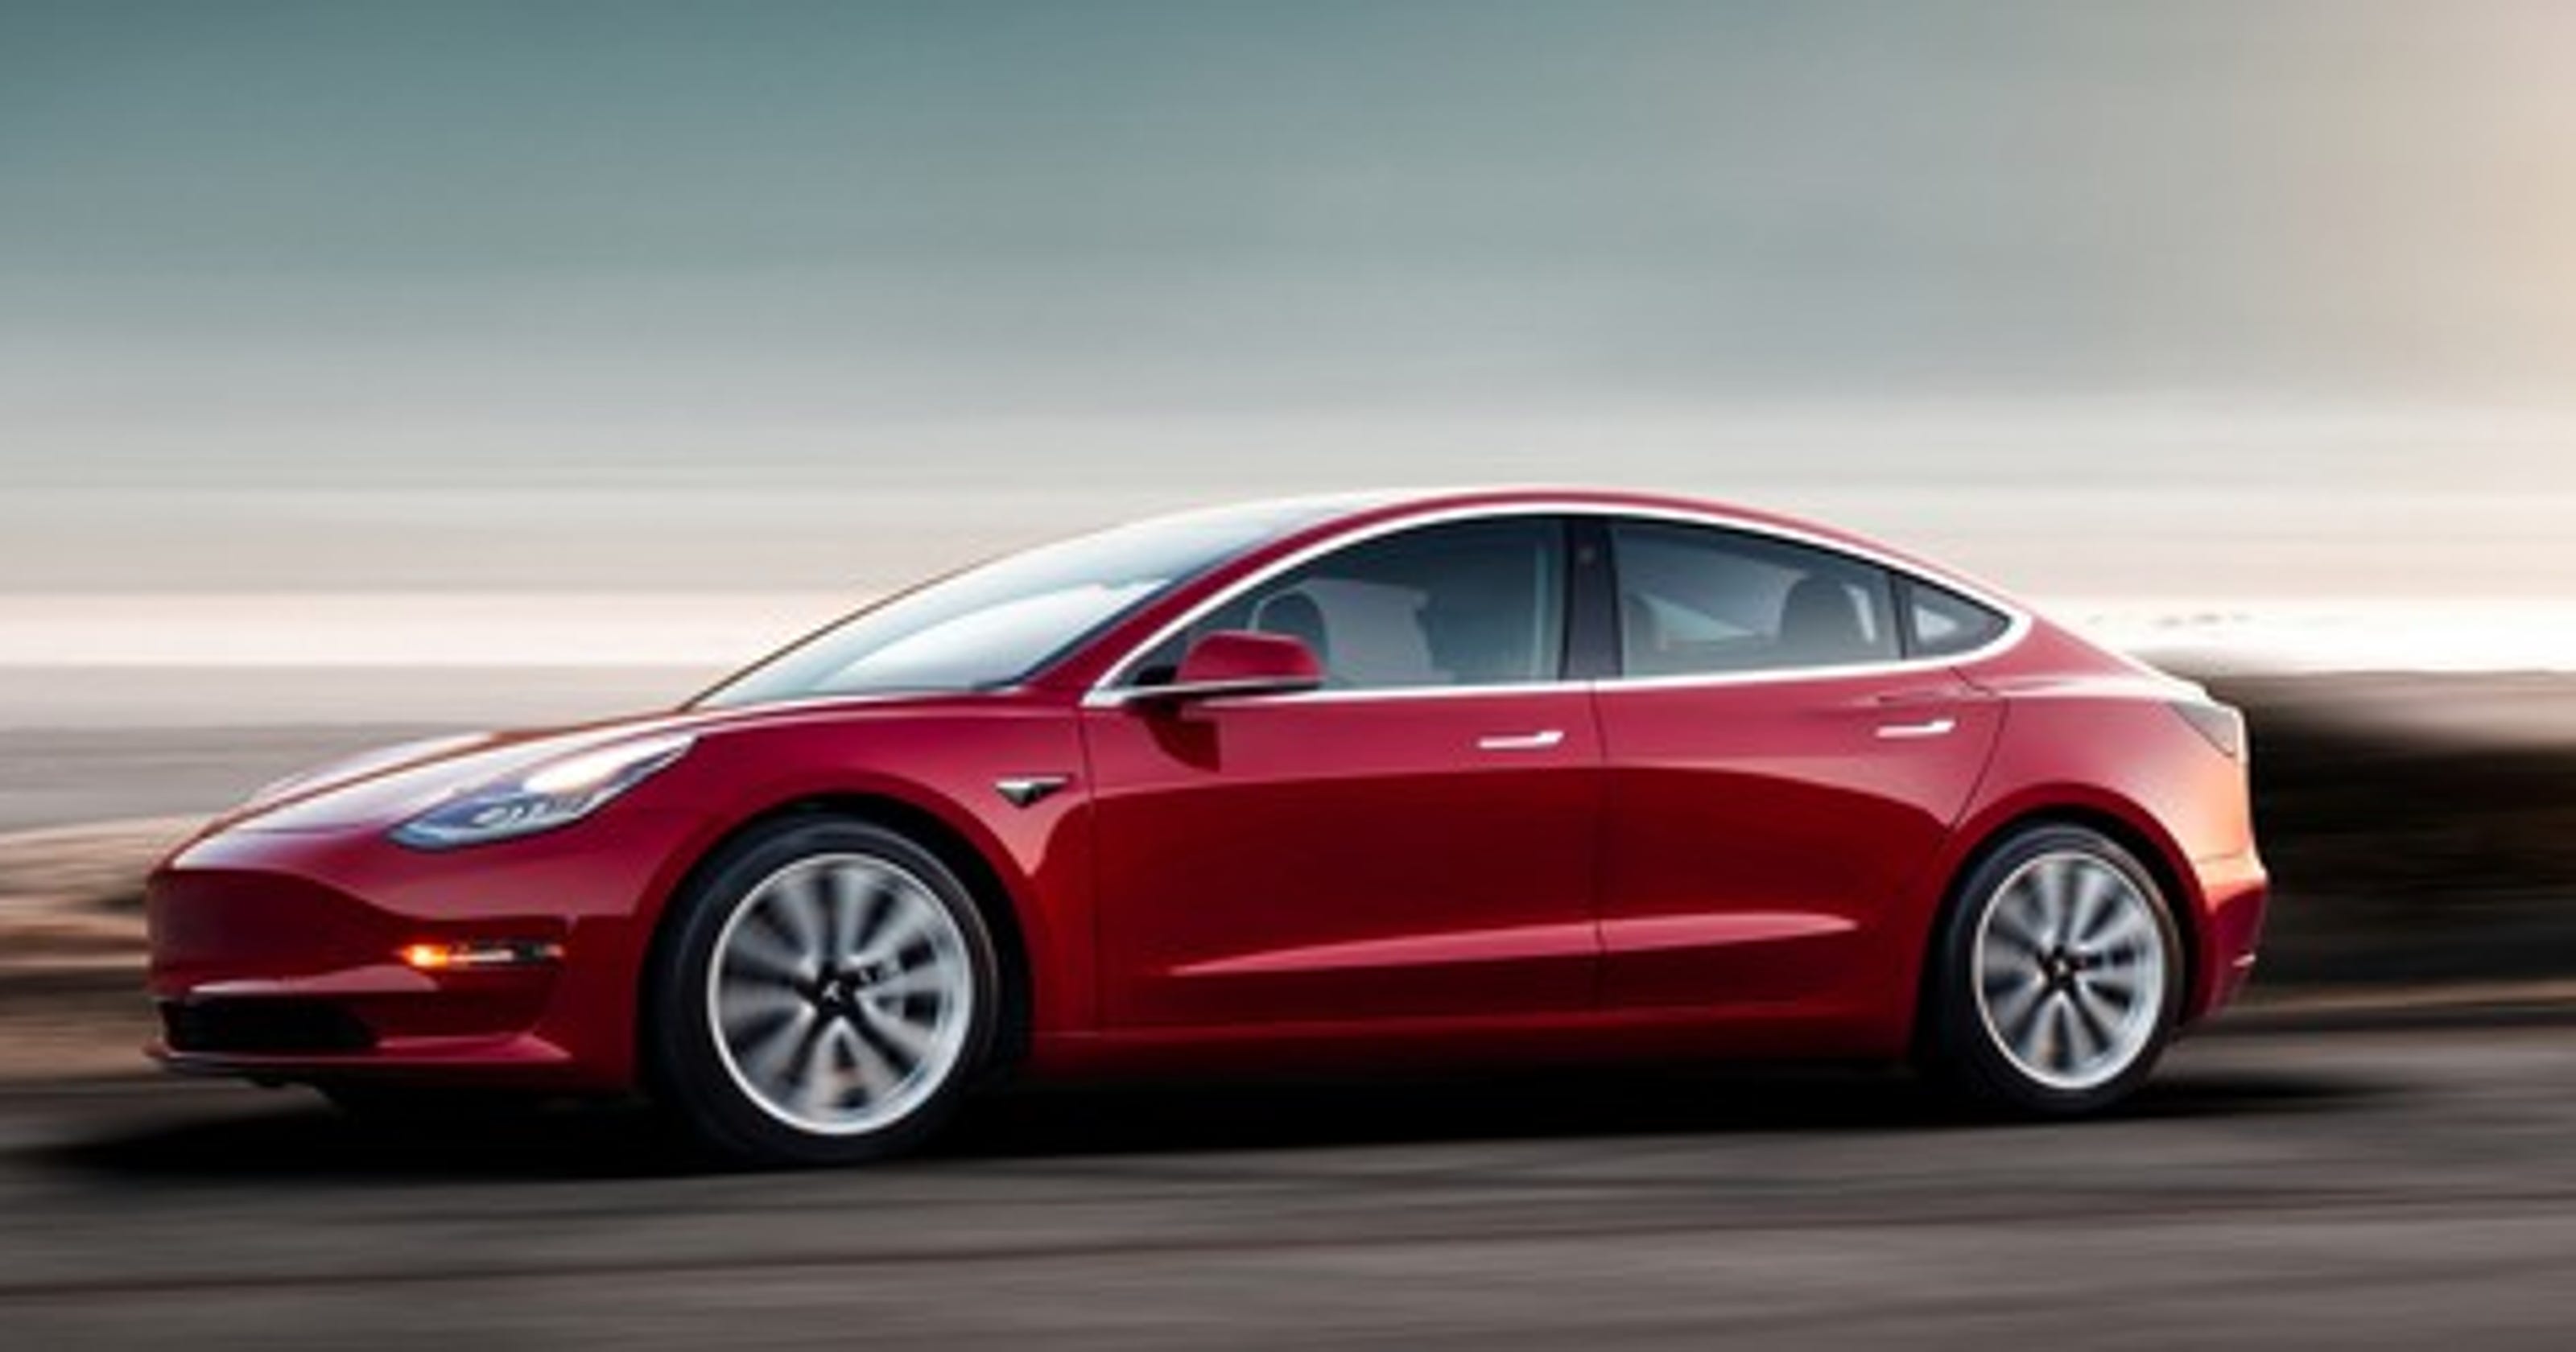 Tesla electric car price cut Model 3, Model S, Model X get discounts